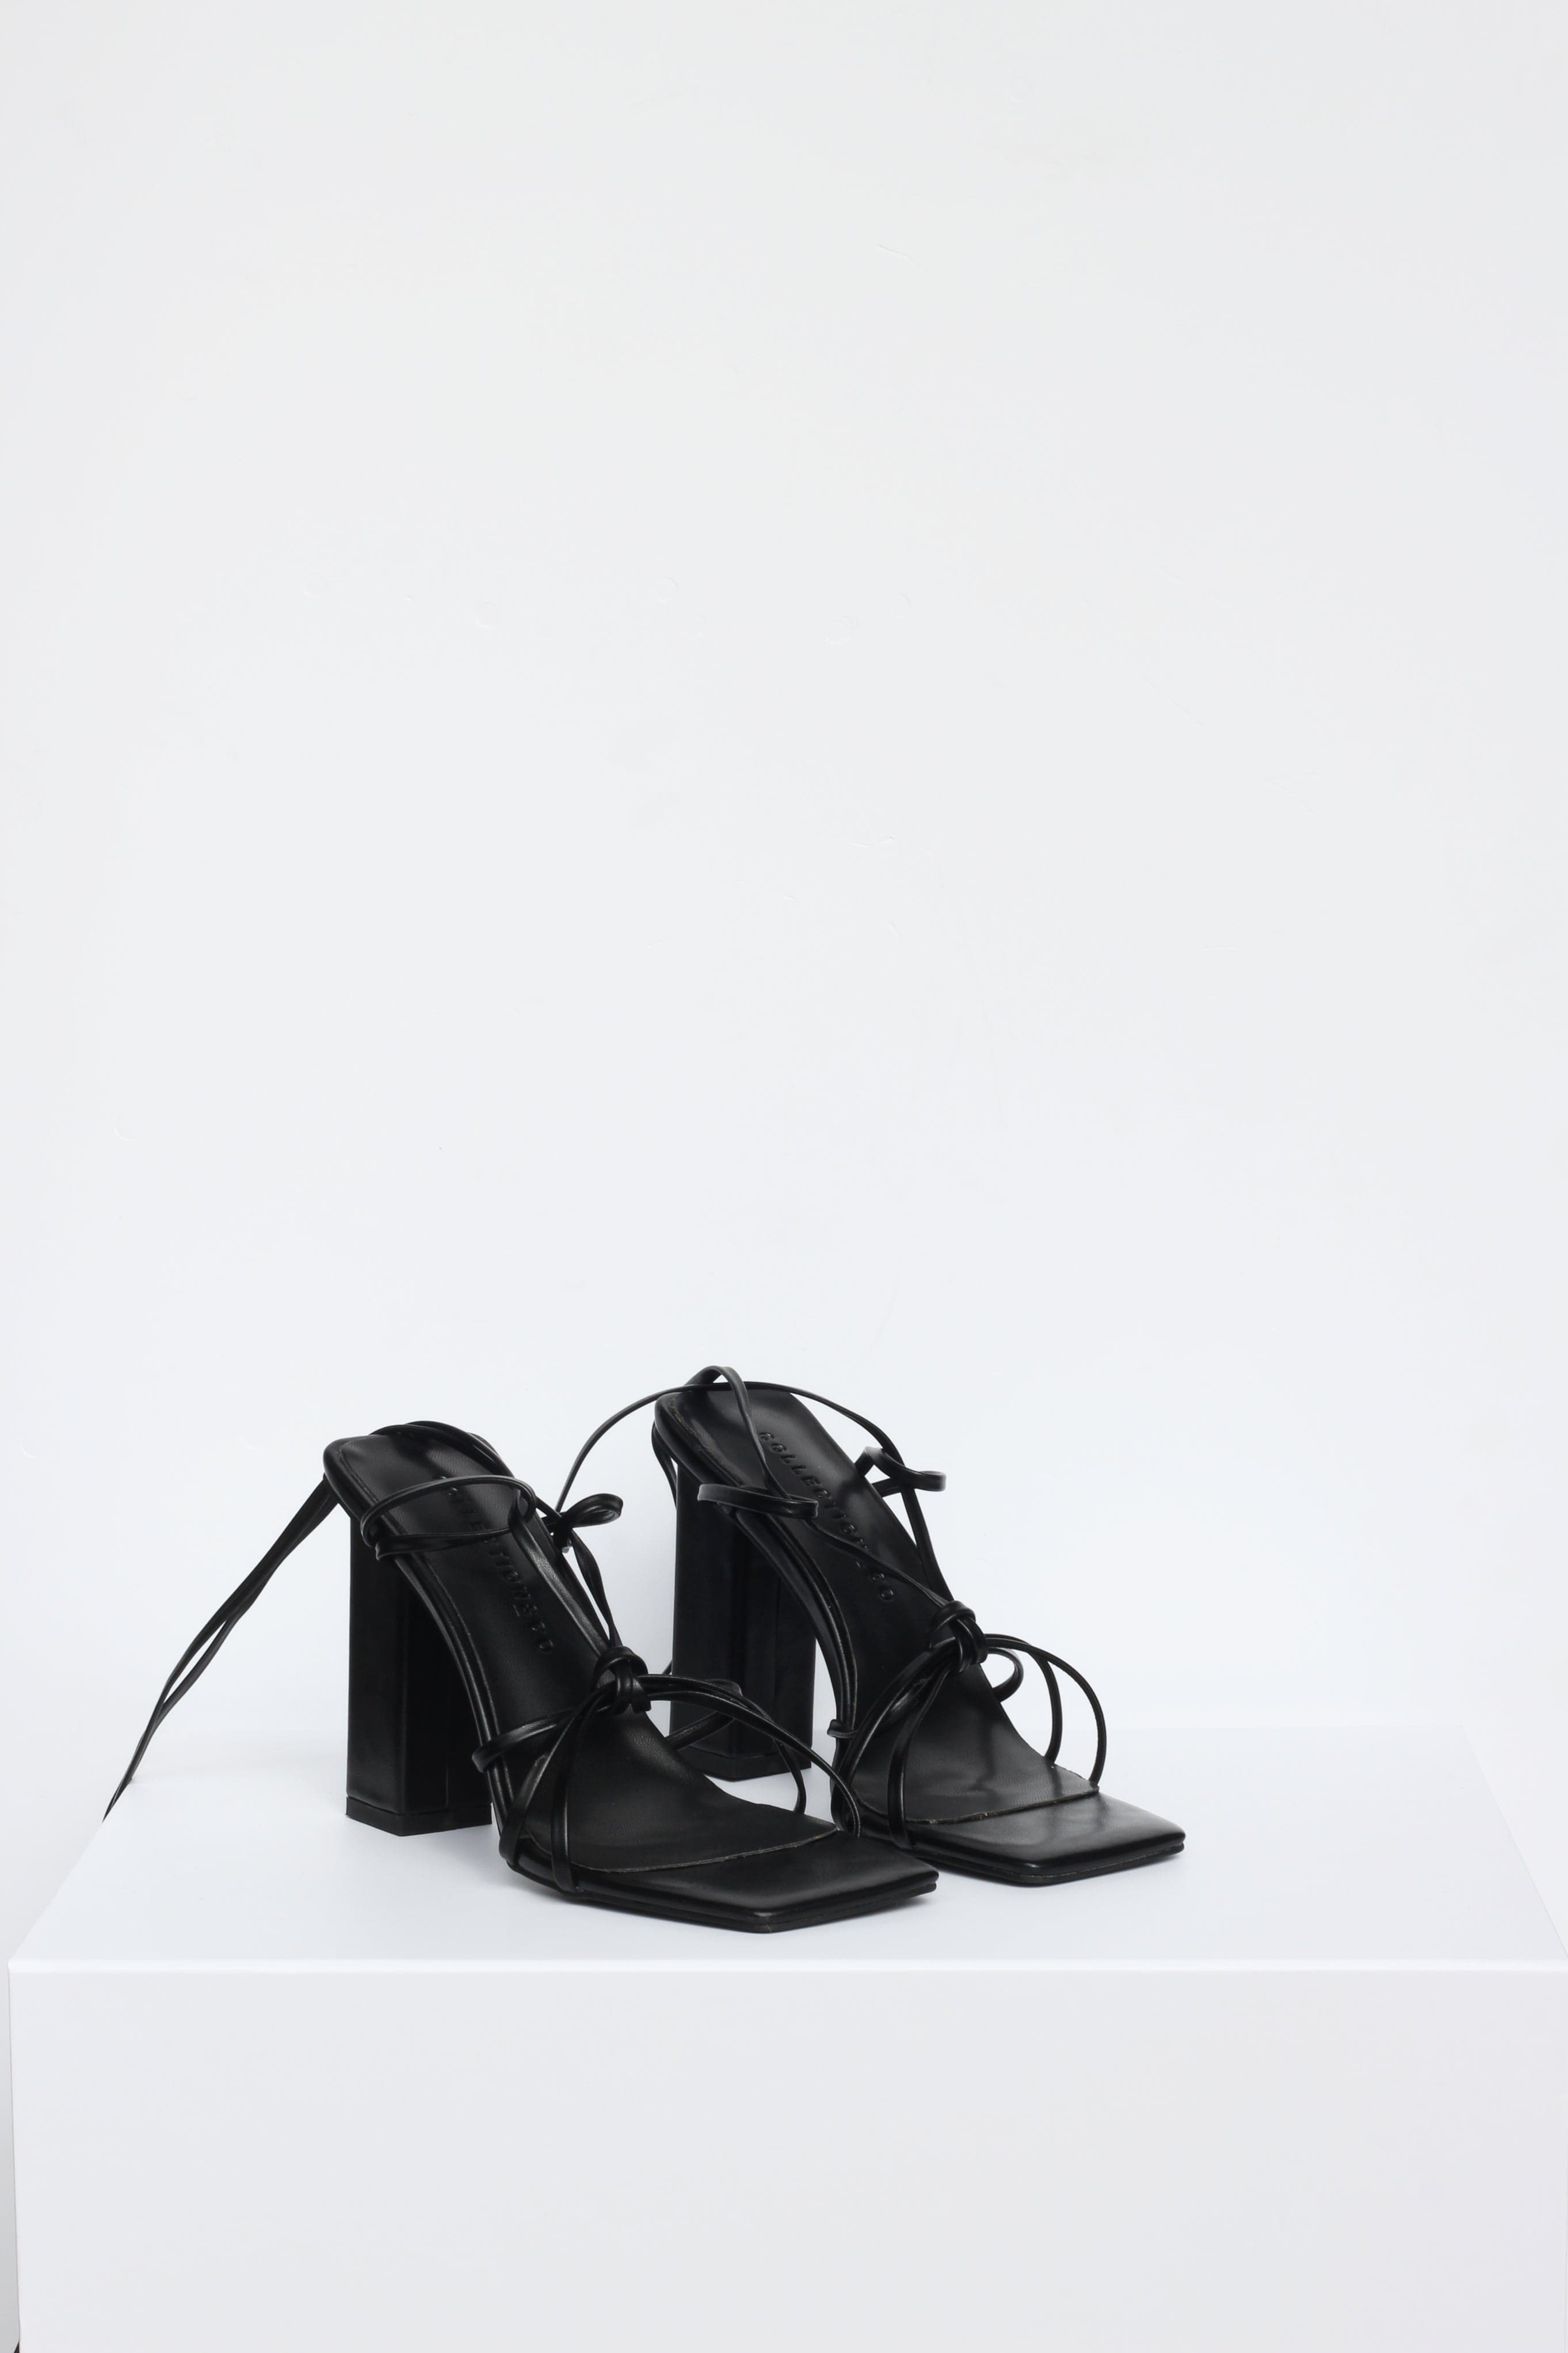 Collection and Co MARA Heeled Sandal, Black